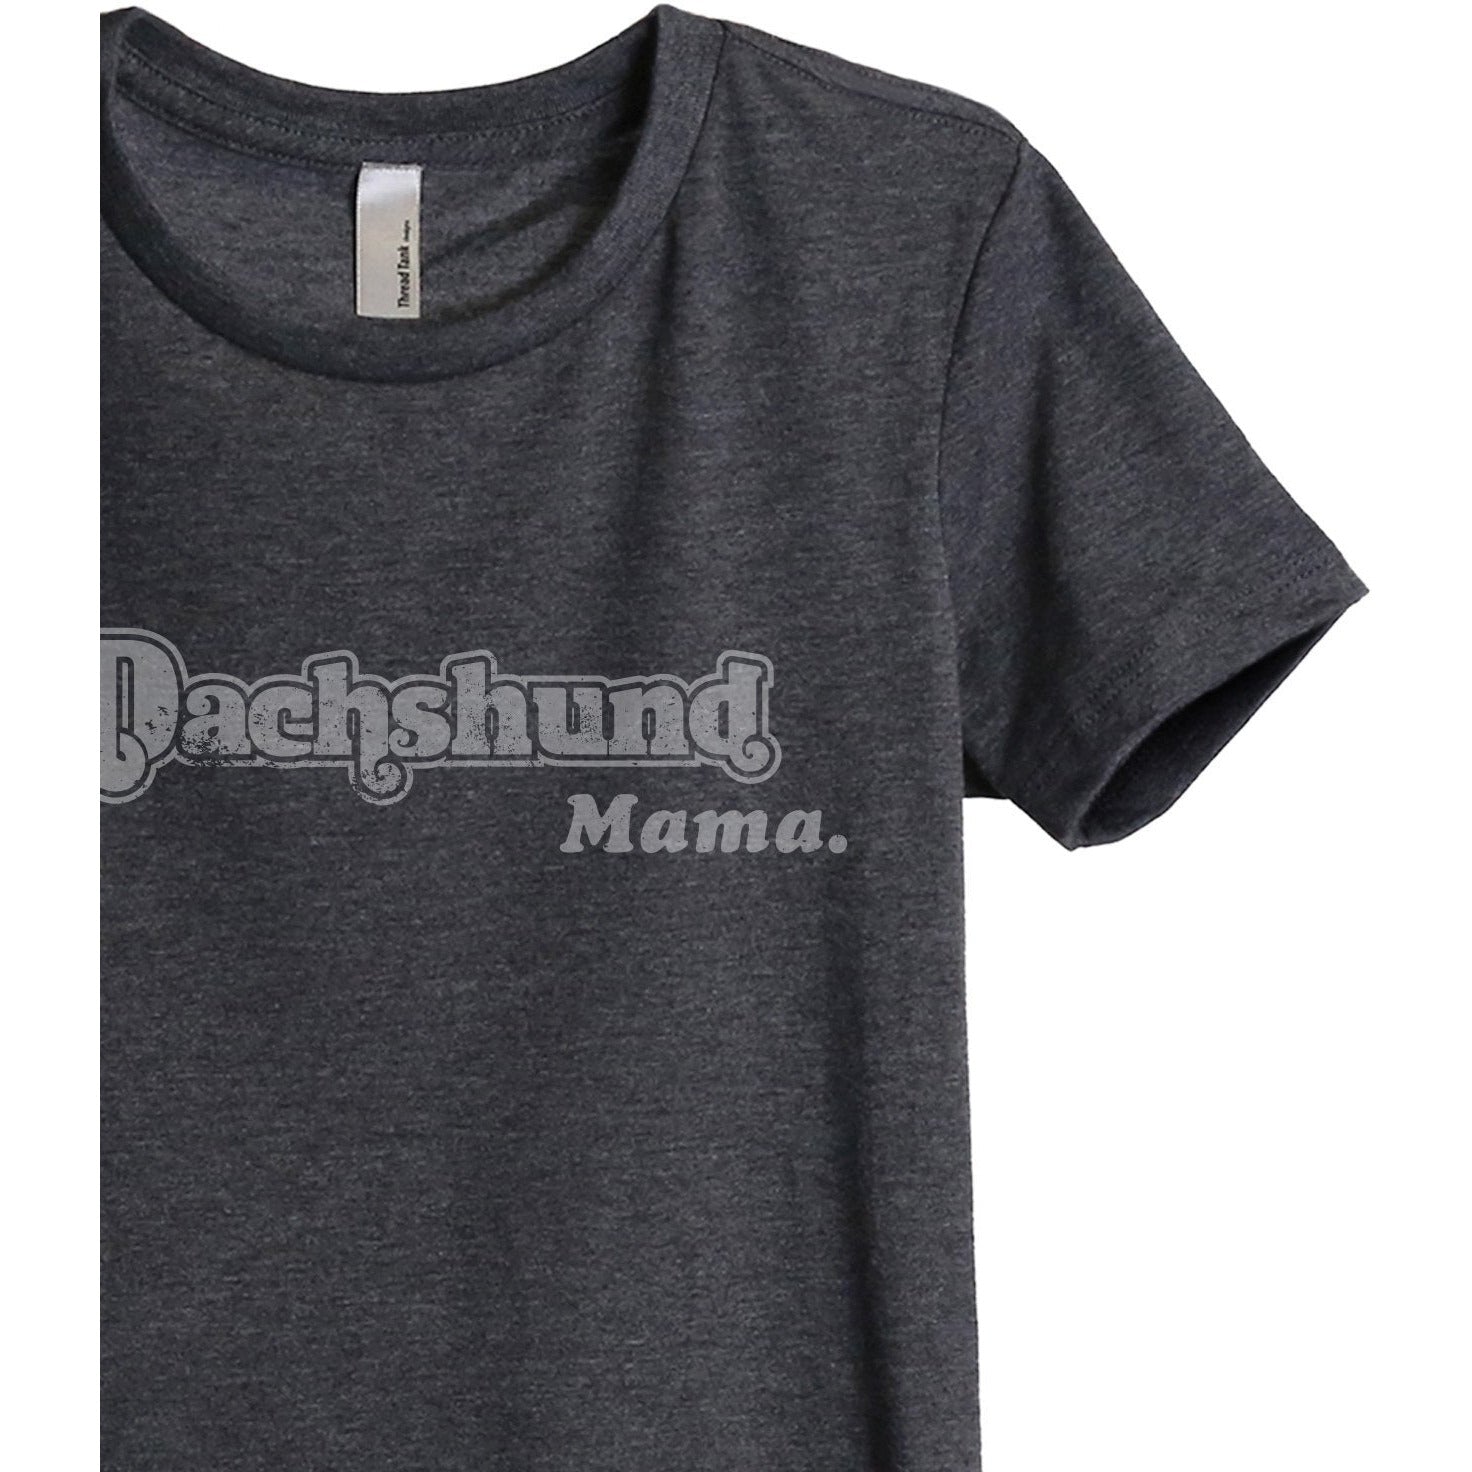 Dachshund Mama Women's Relaxed Crewneck T-Shirt Top Tee Charcoal Grey
